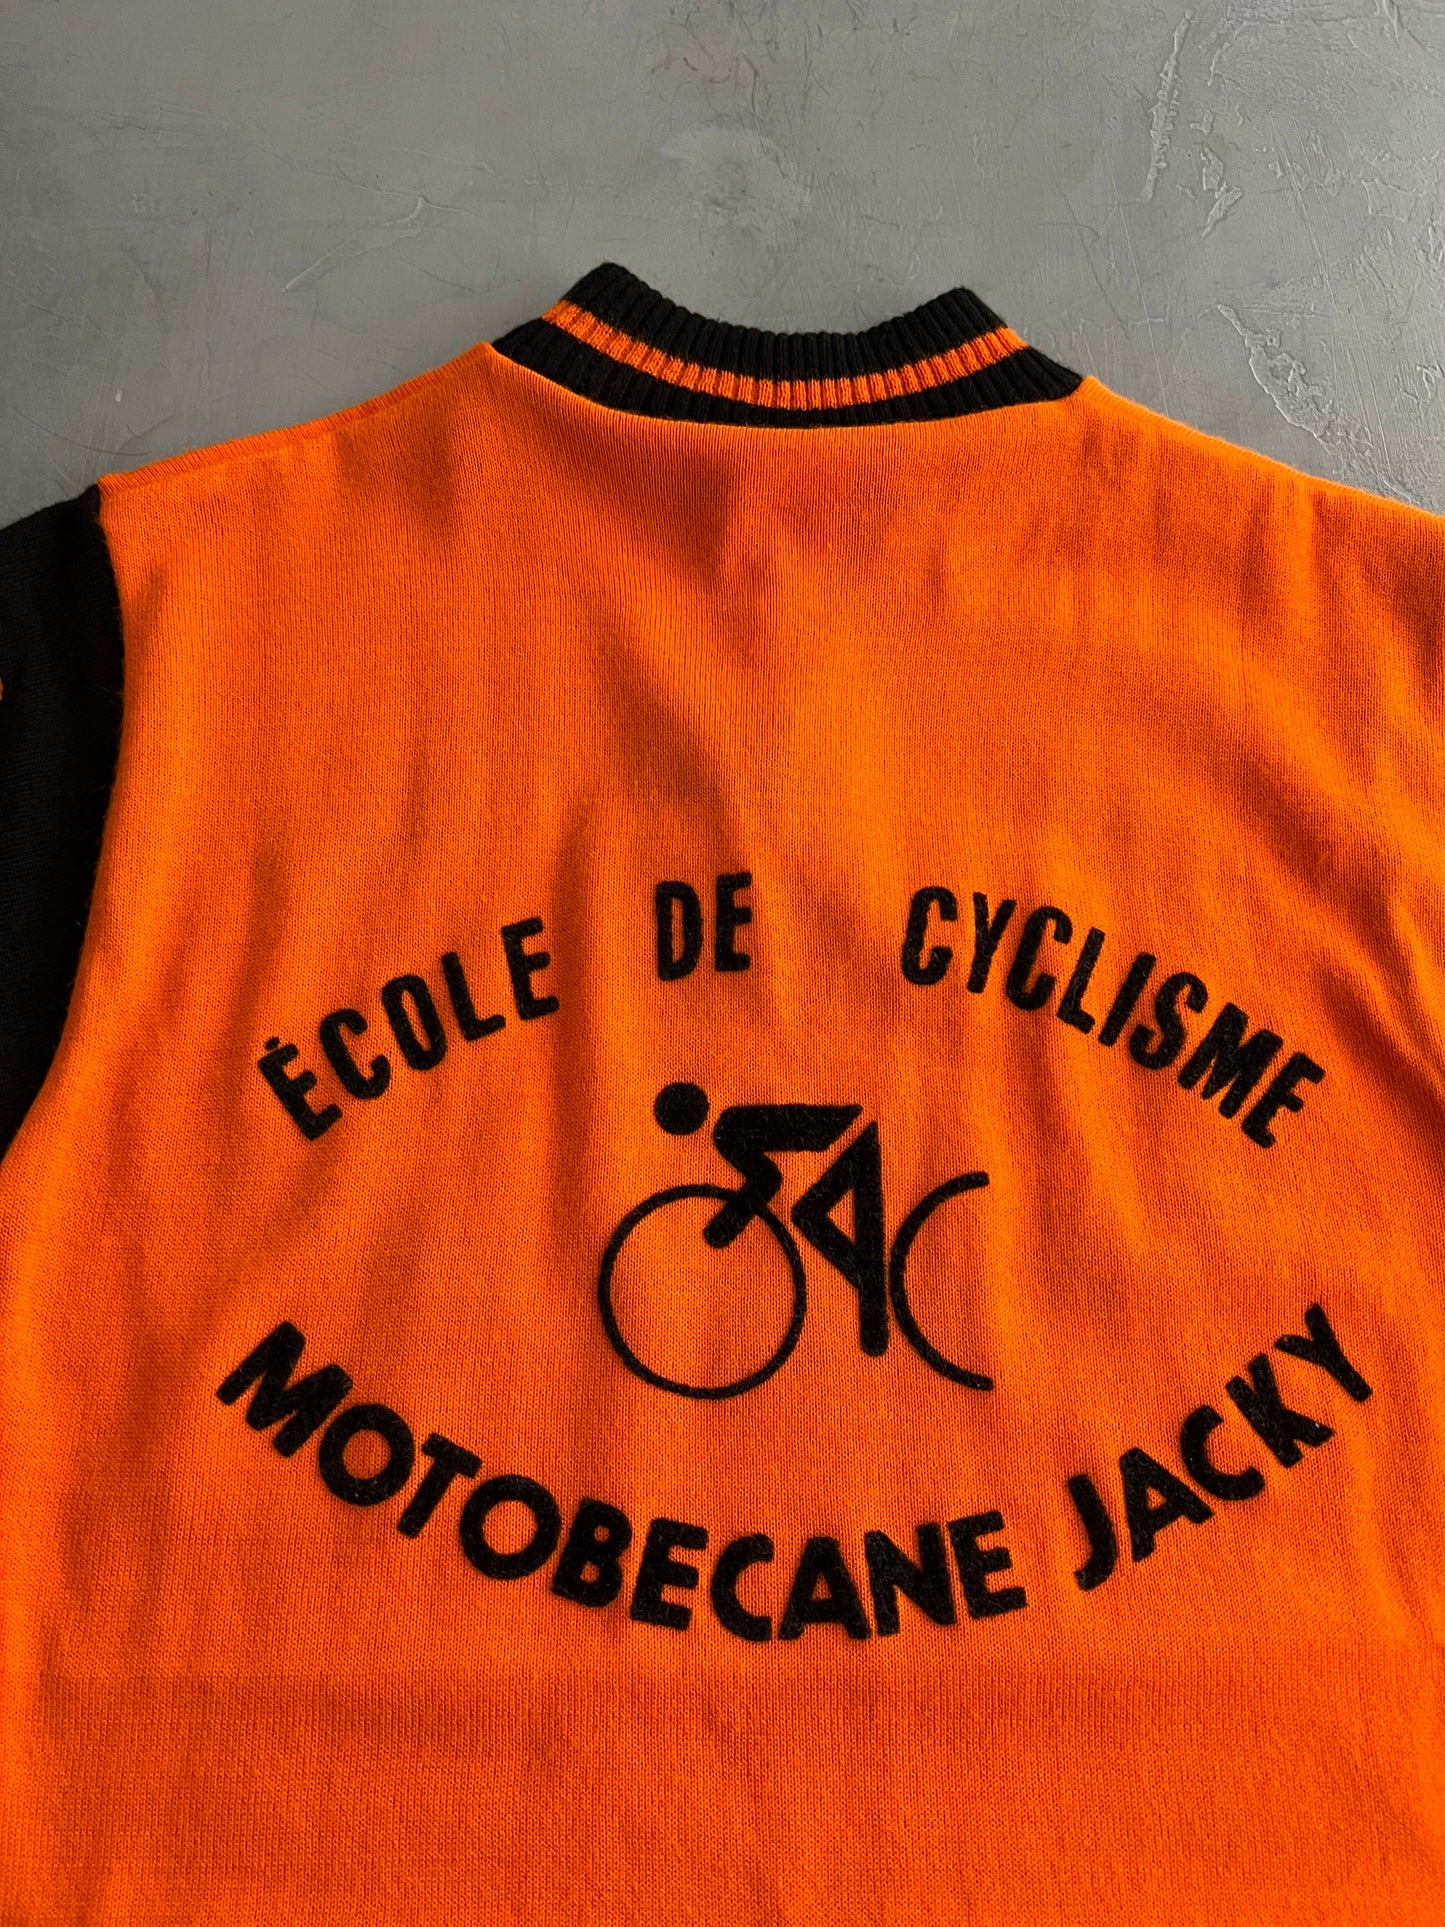 French Cycling Jersey [XS]